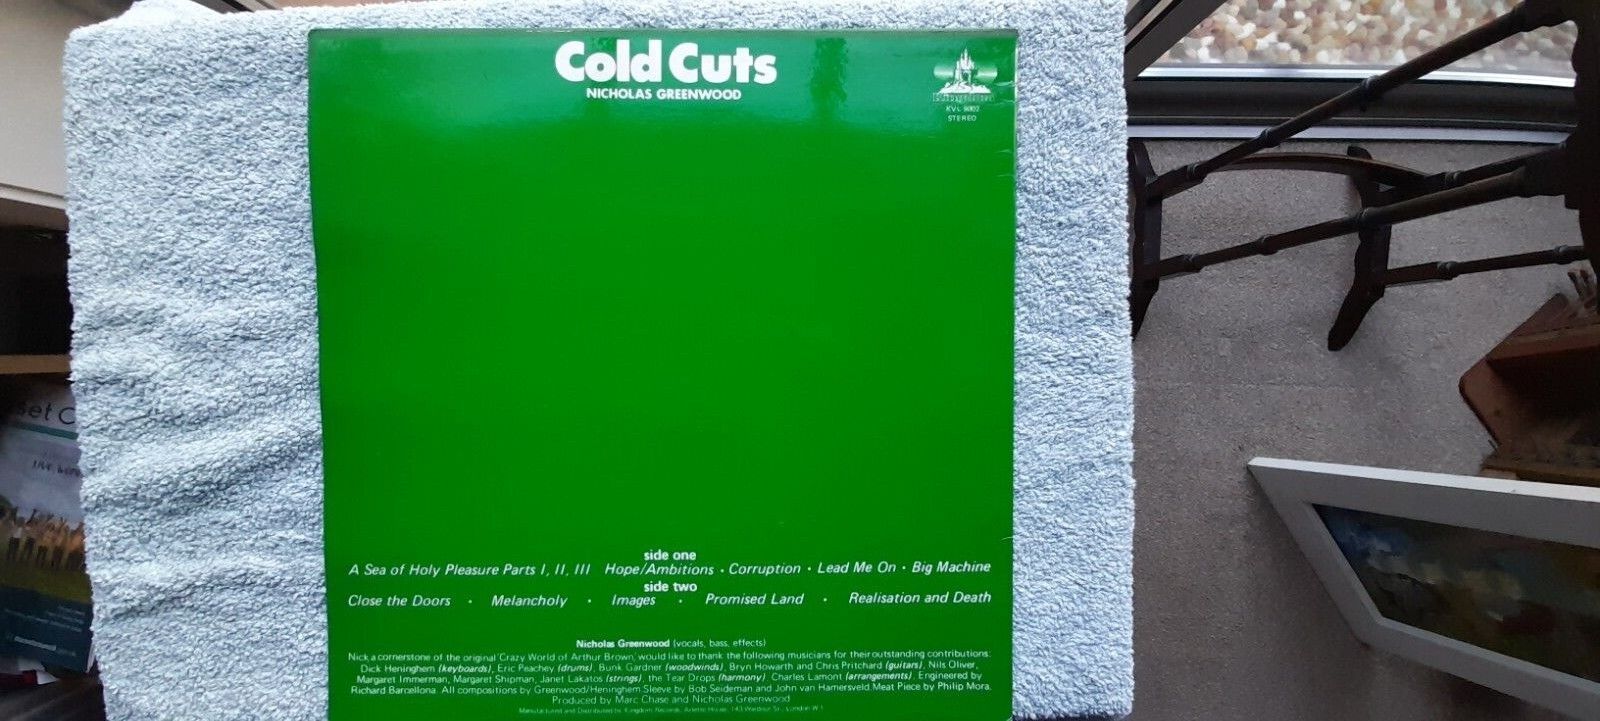 Pic 3 Very Rare Vinyl LP Cold Cuts by Nicholas Greenwood 1972